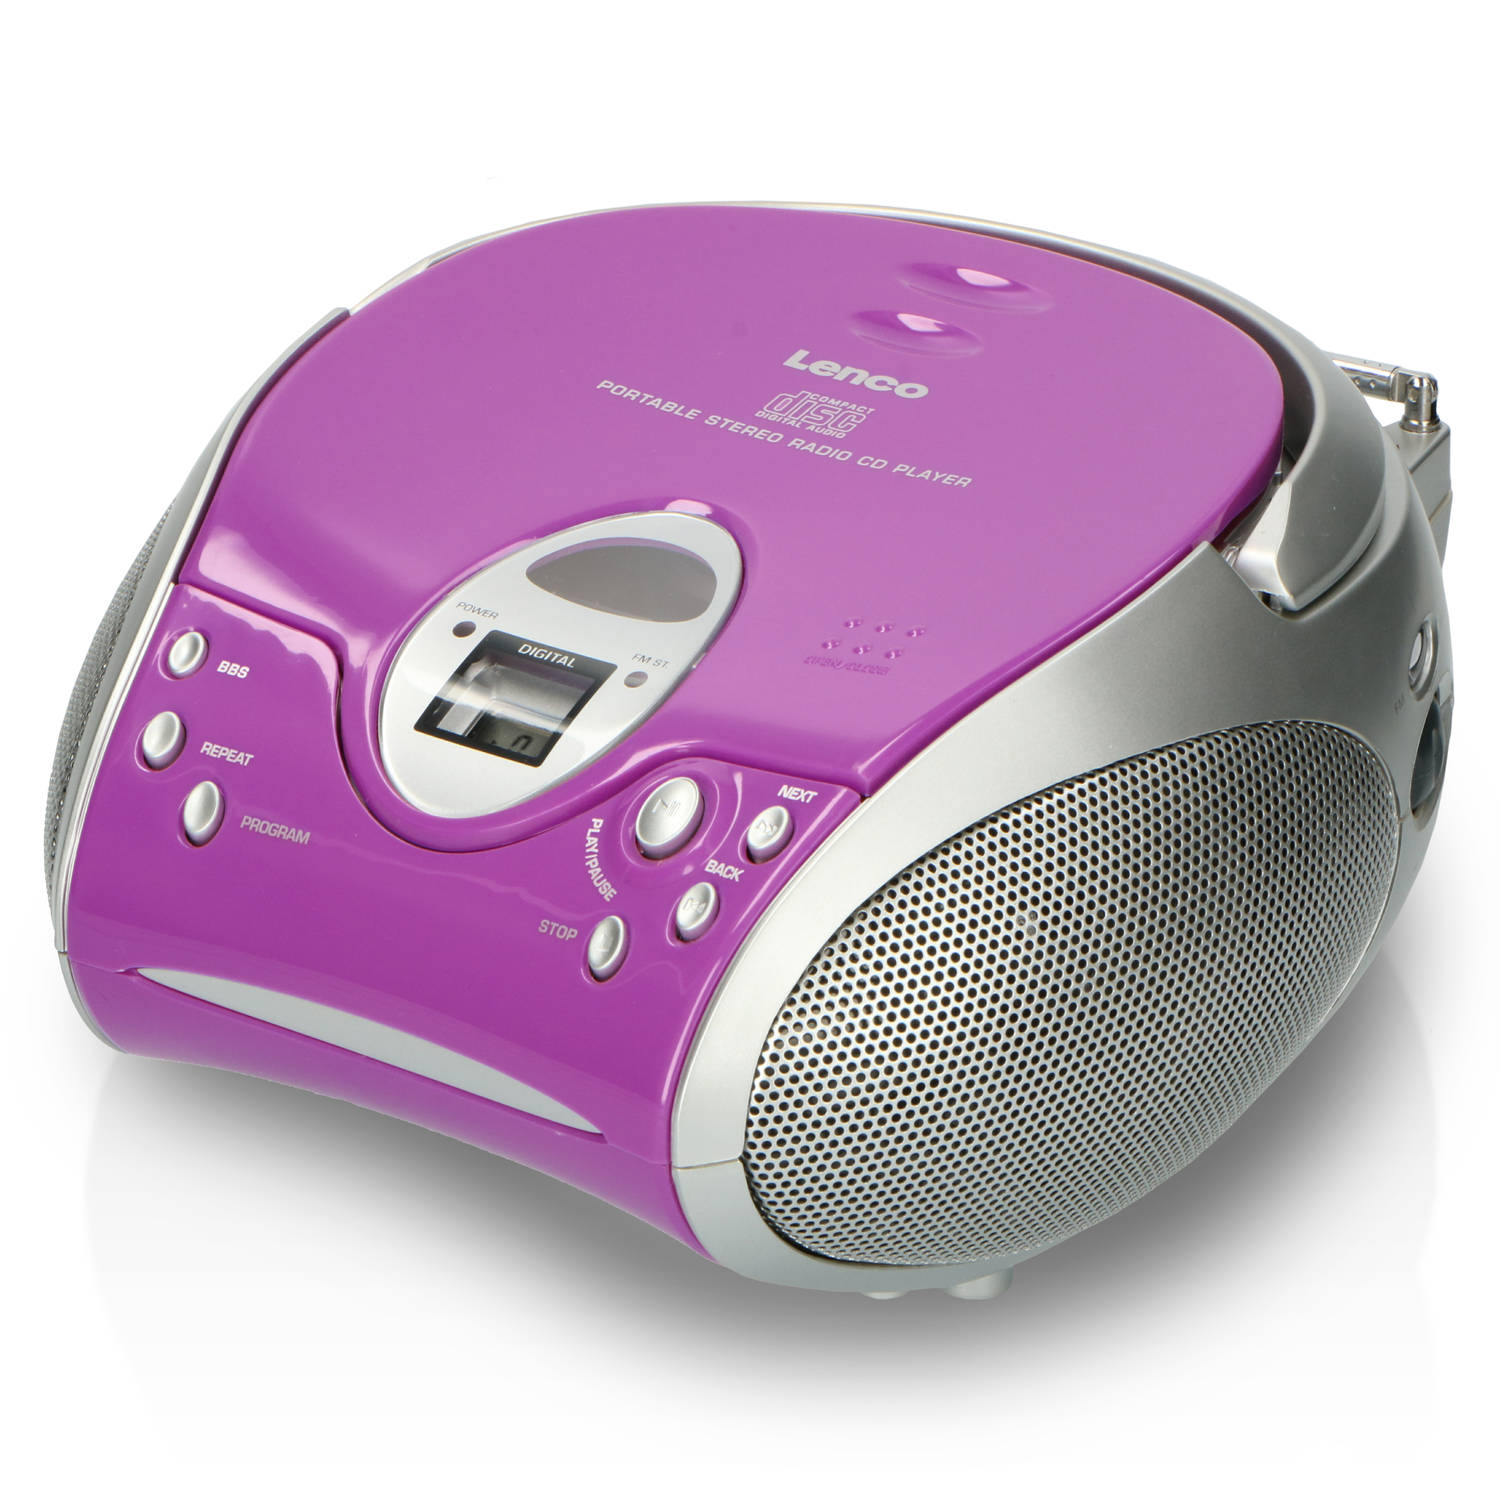 LENCO LENCO Portable radio-cd-speler